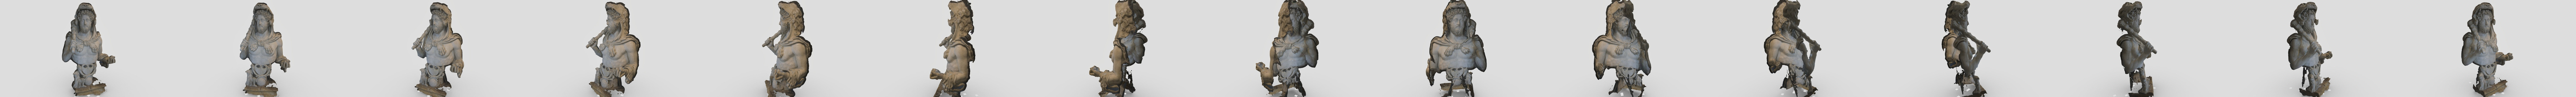 Commodus as Hercules - Wikipedia